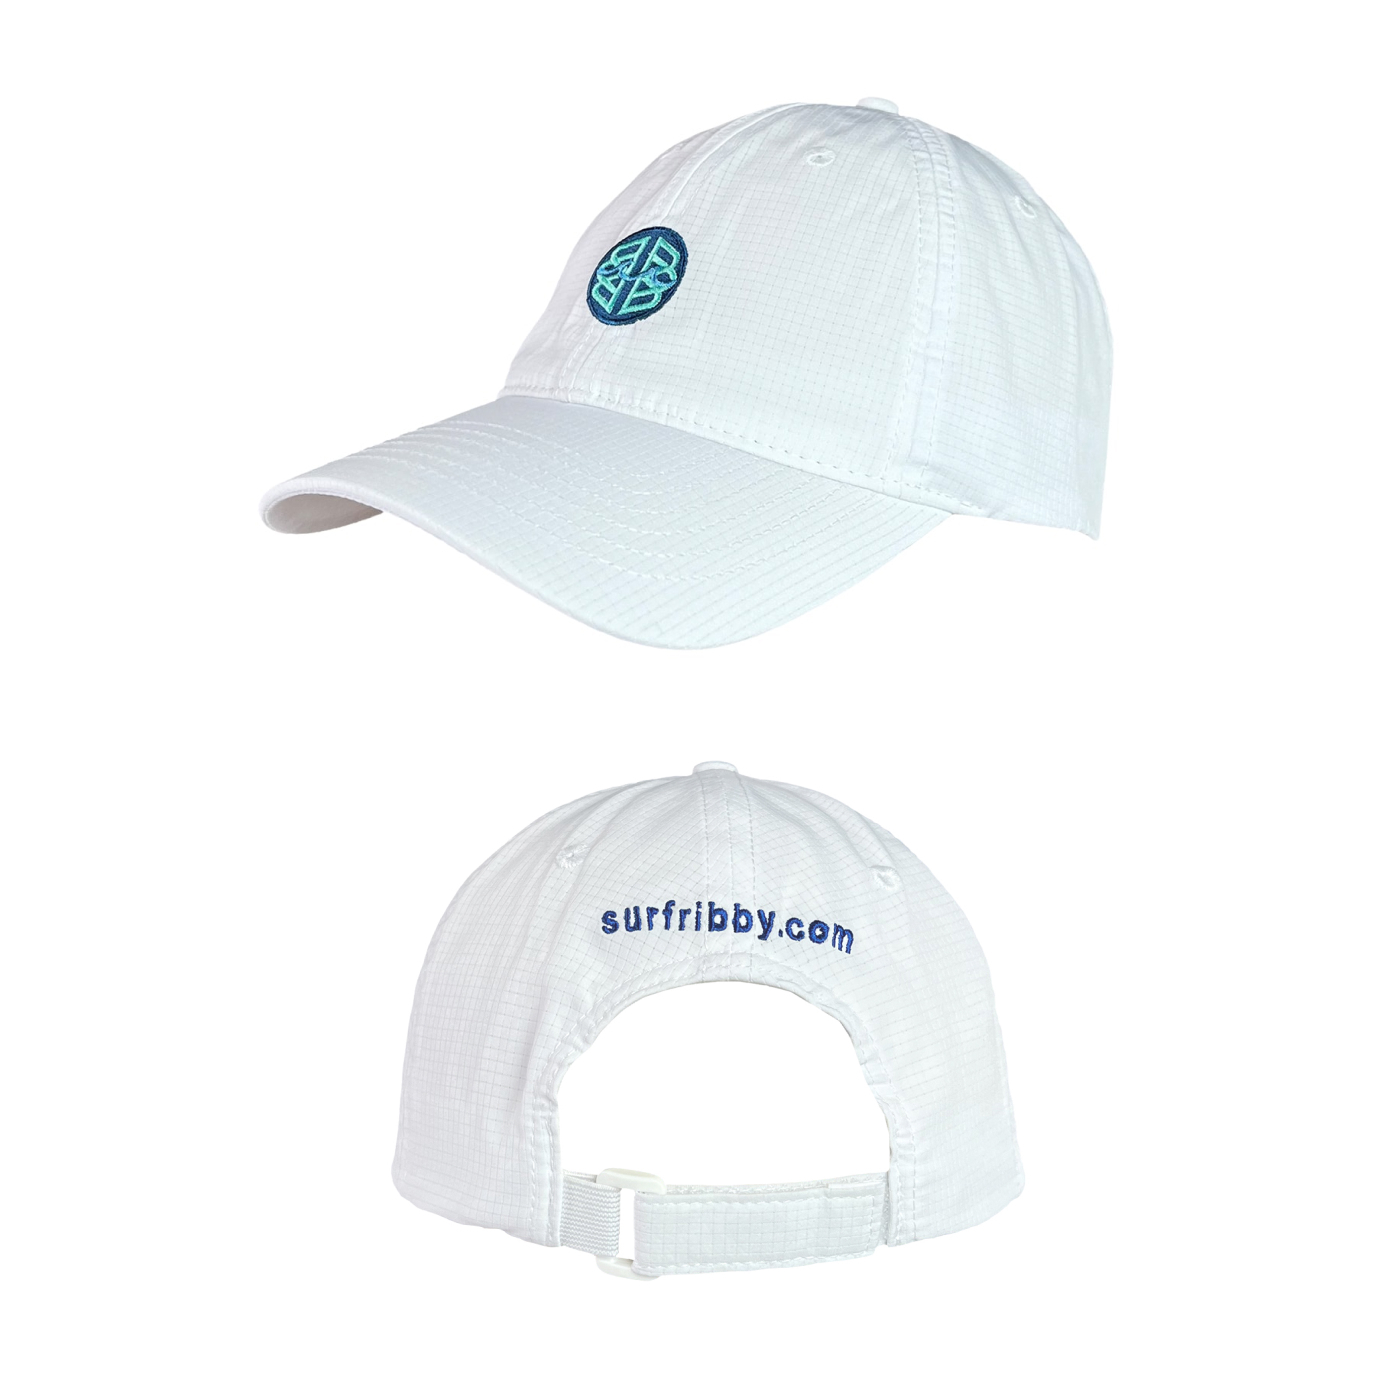 Ribby - White baseball hat with velcro back